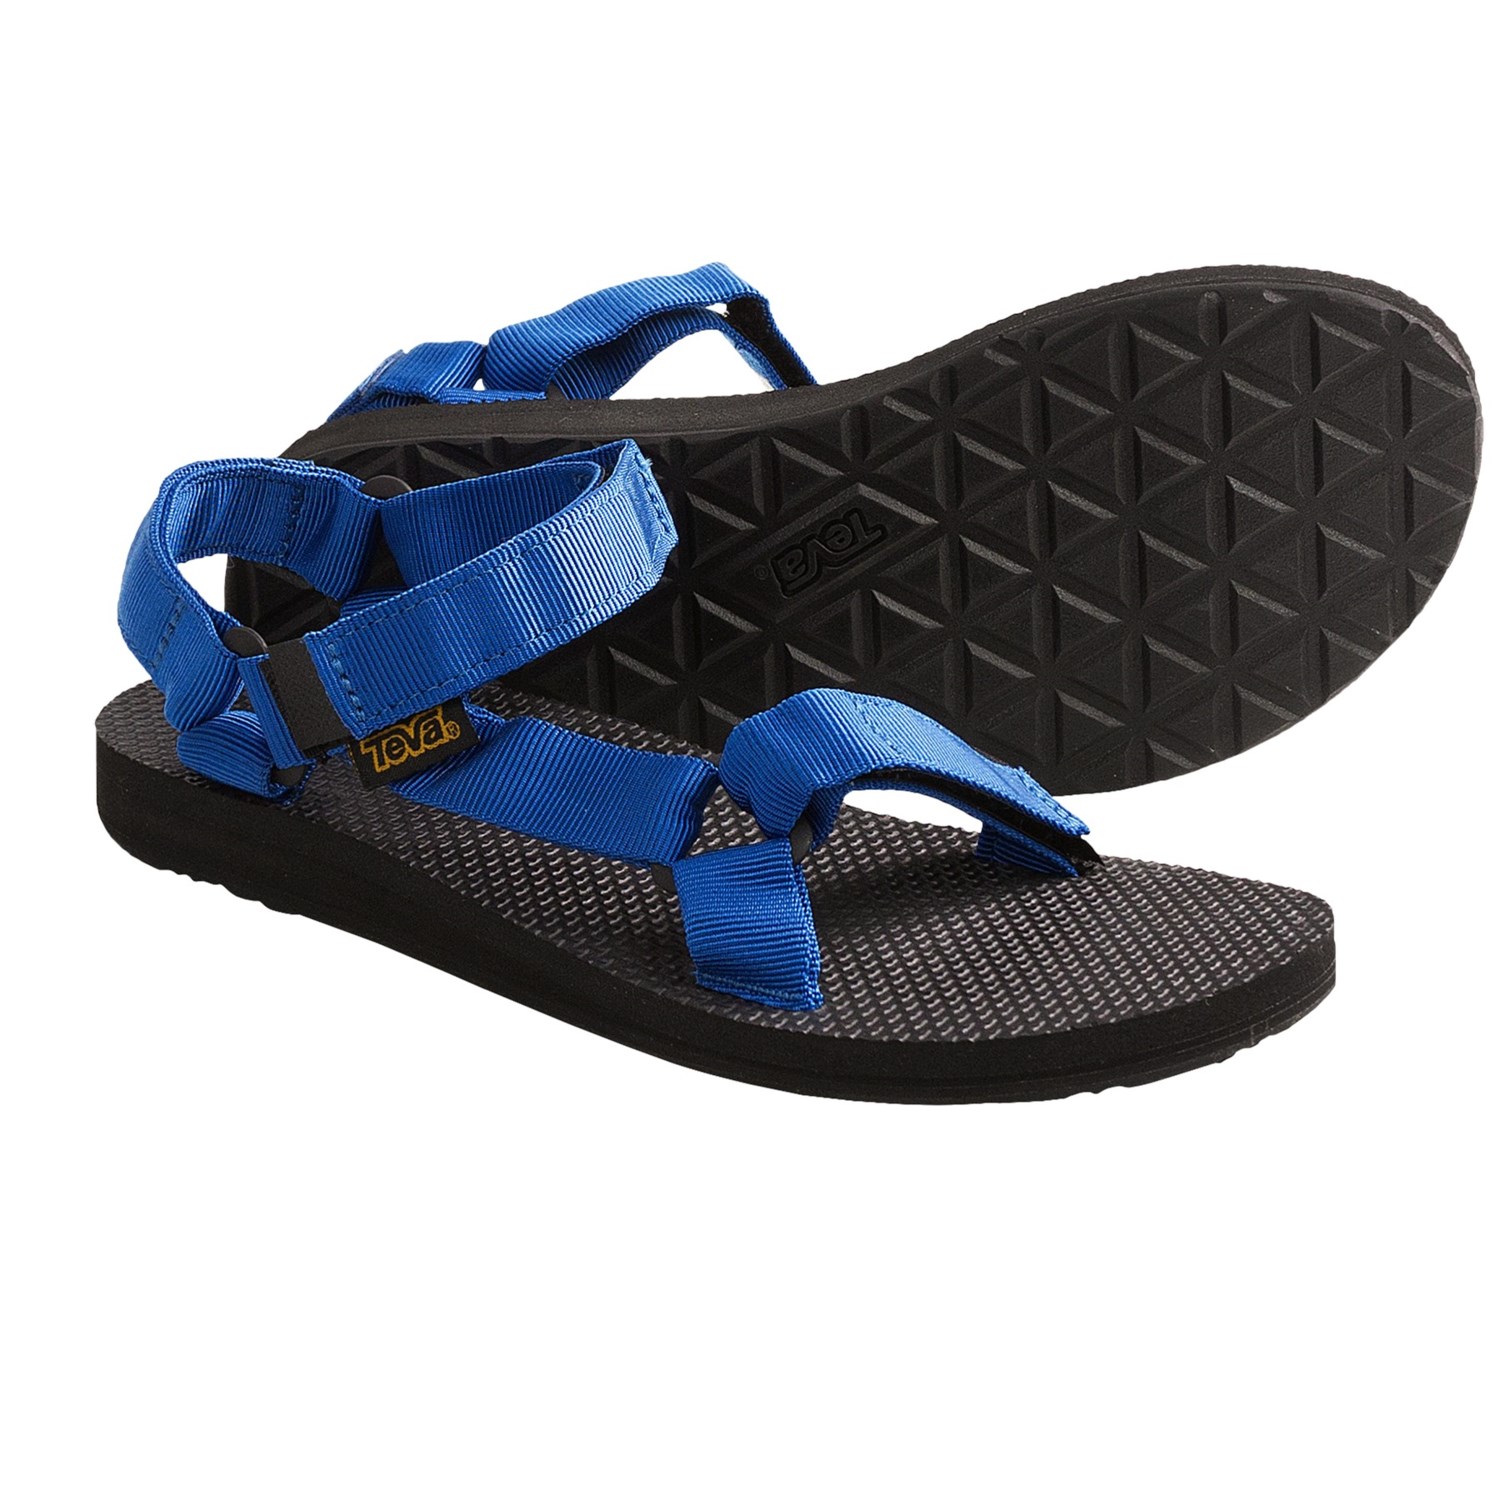 Teva Original Universal Sport Sandals (For Women) in Mykonos Blue